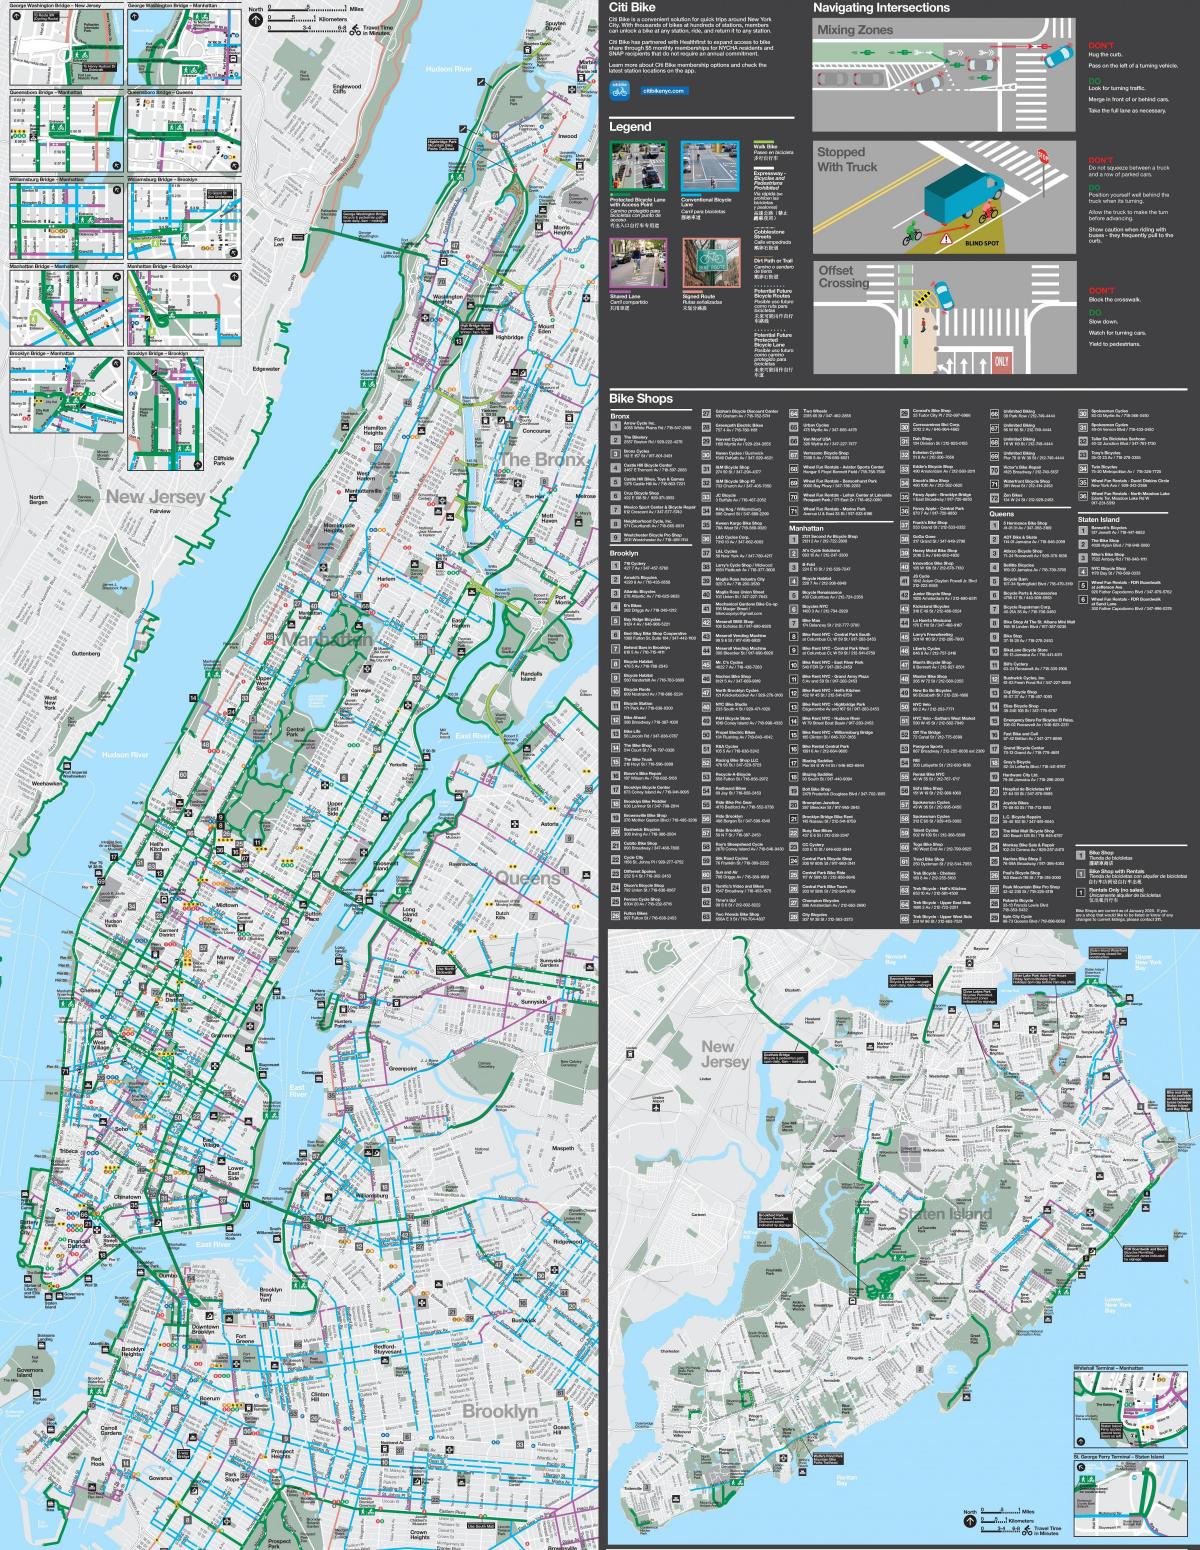 Nueva York en bicicleta mapa